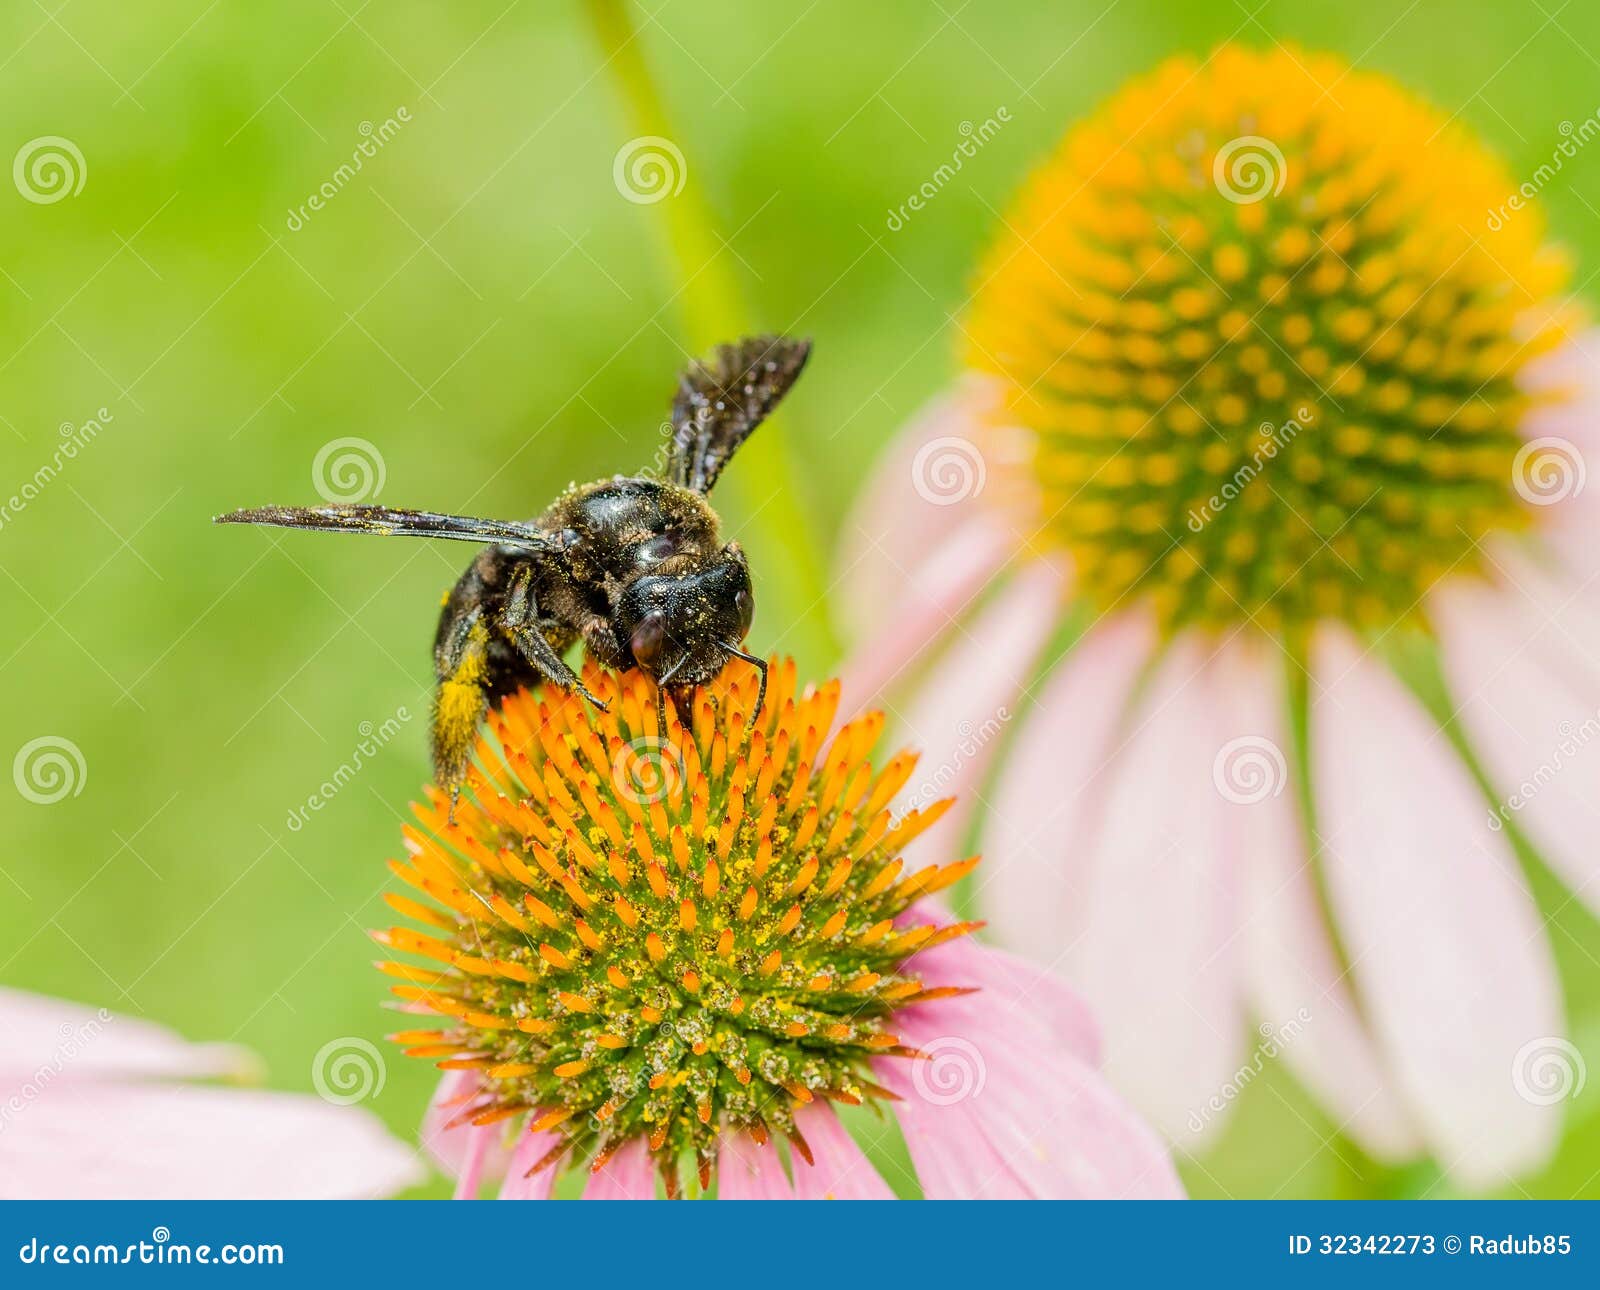 bumble bee gathering polen